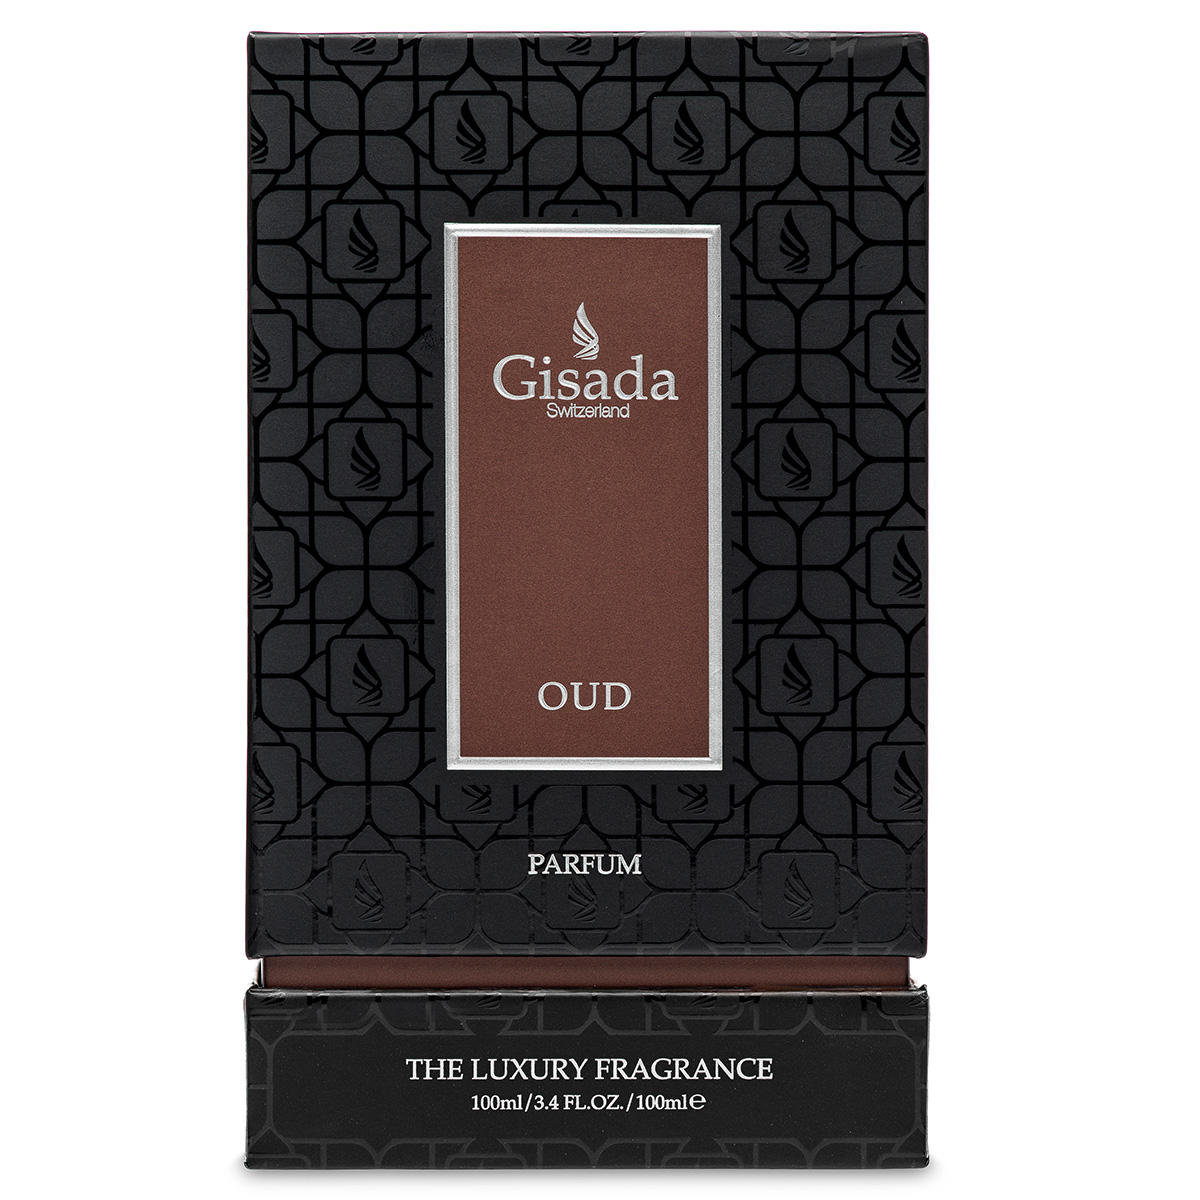 Gisada Oud Eau de Parfum 100 ml - 2